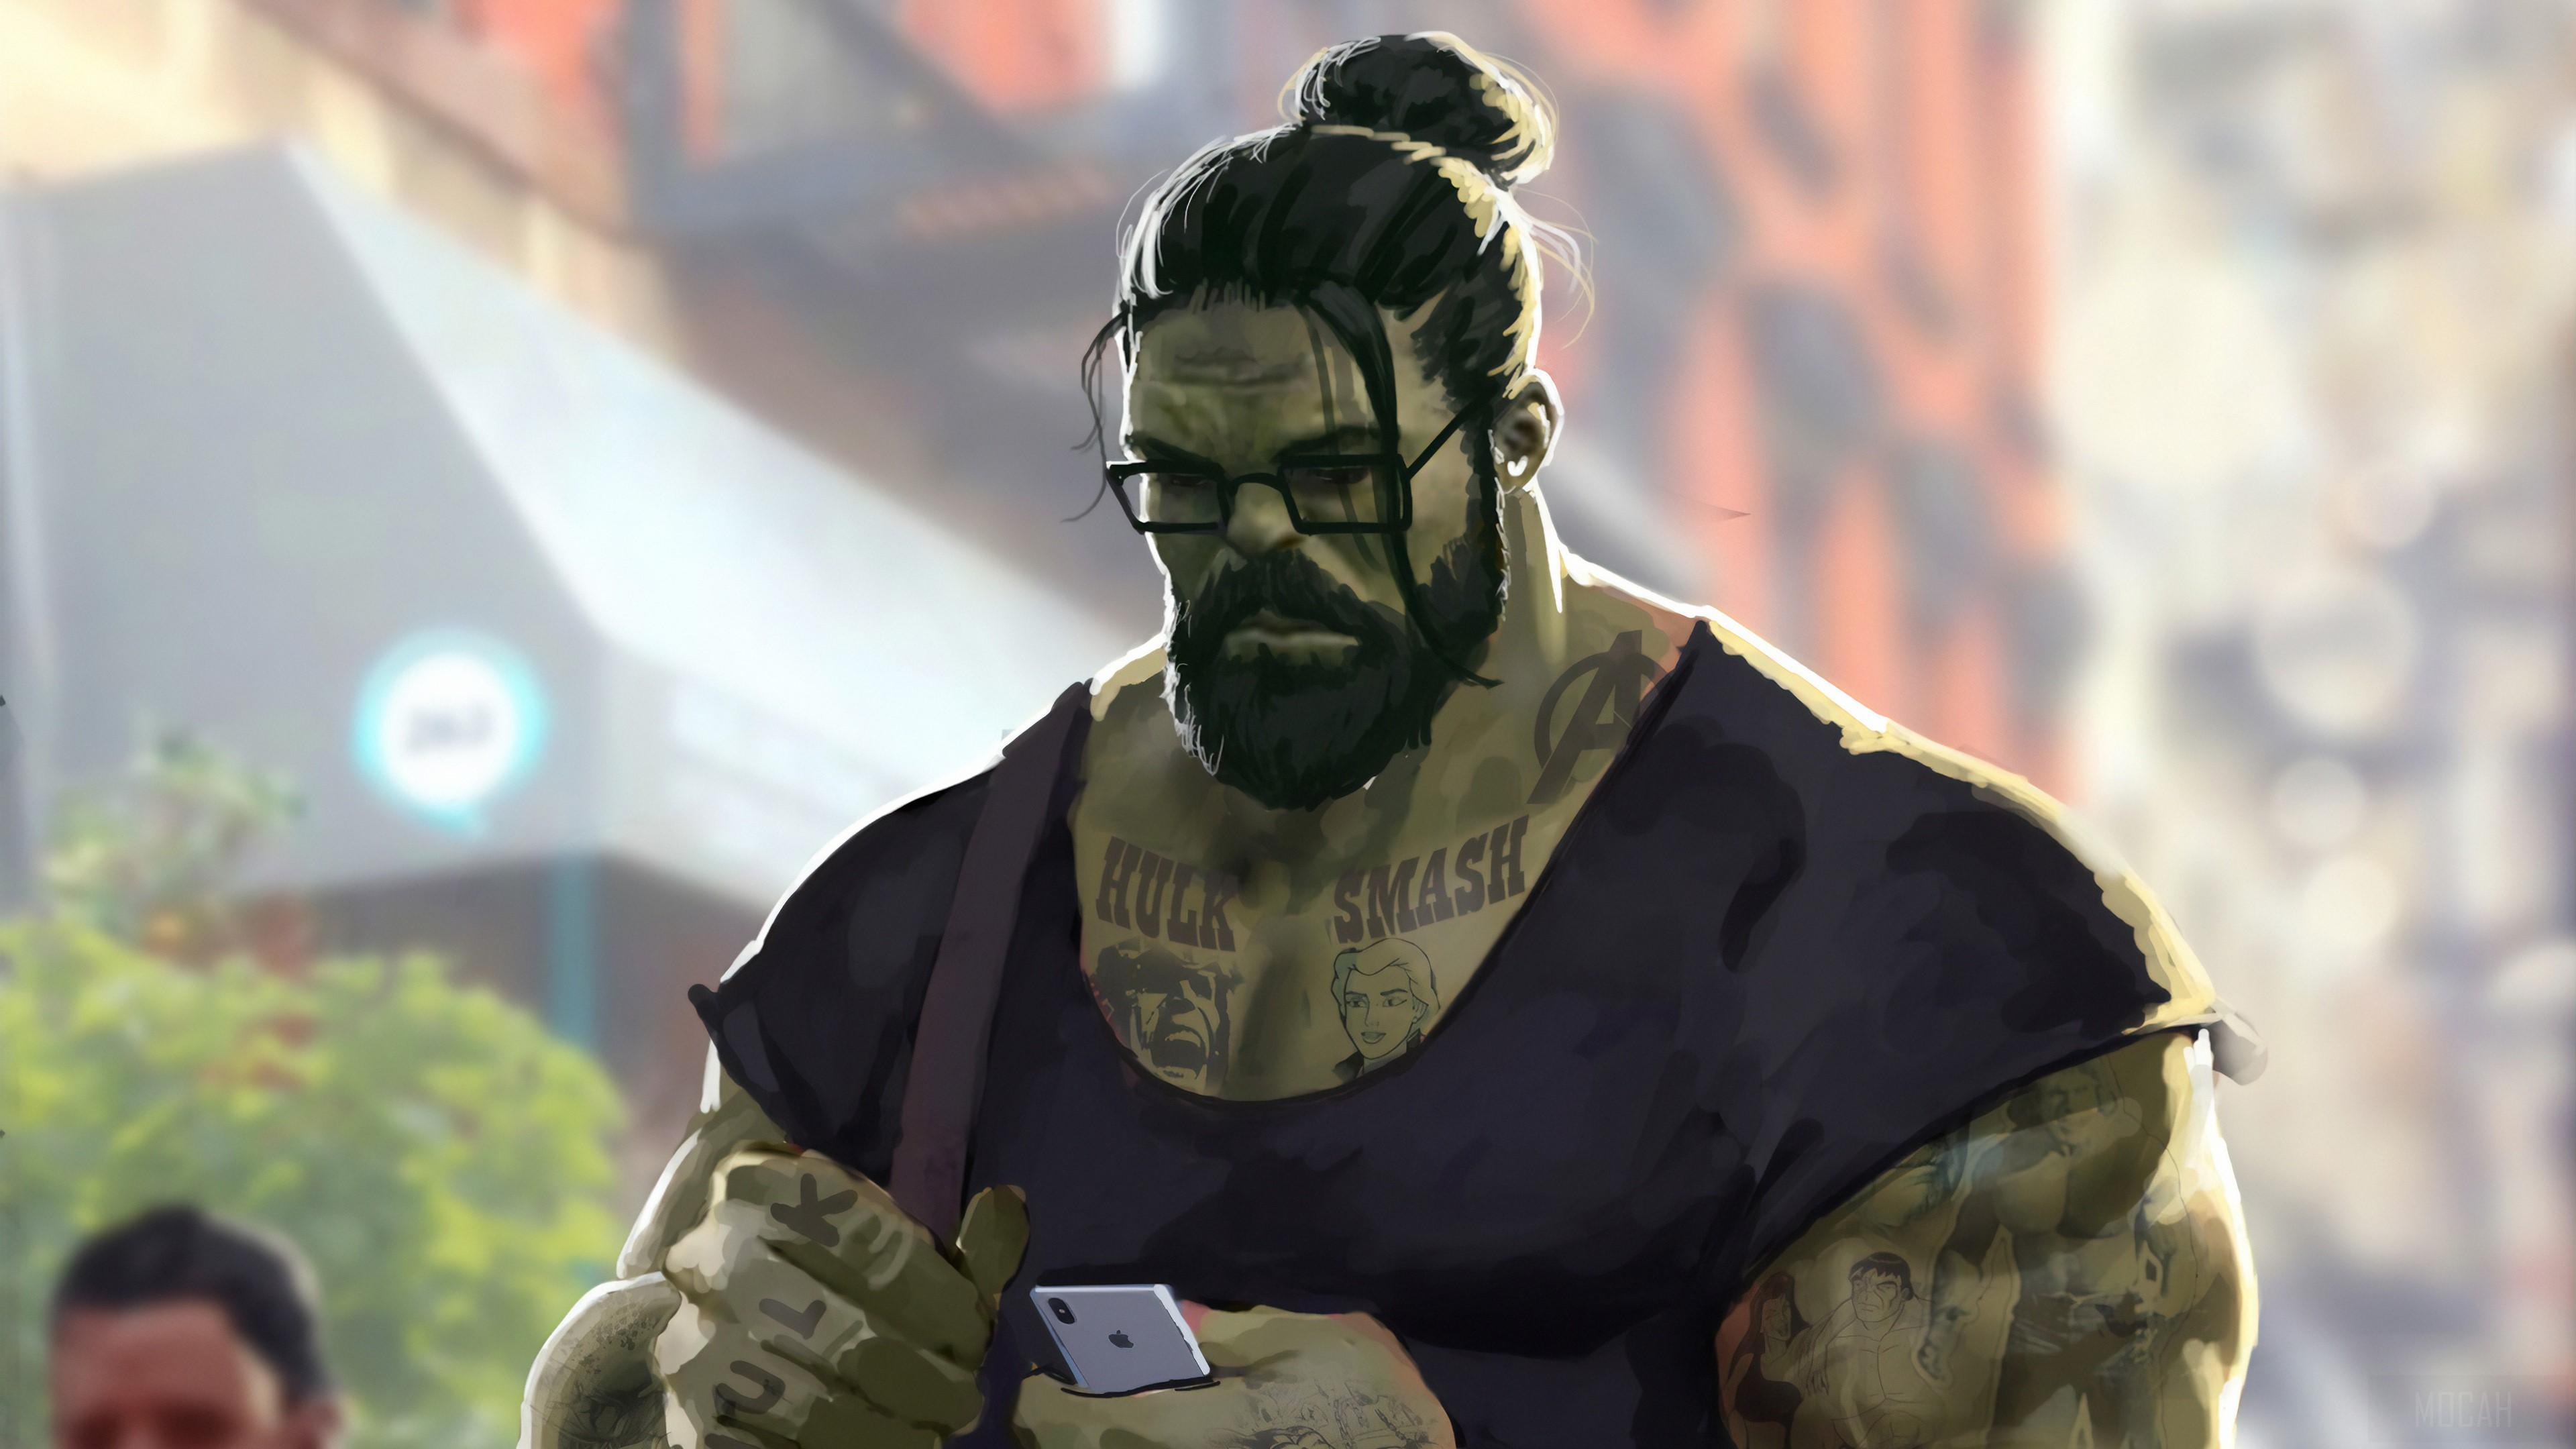 HD wallpaper, Professor Hulk Man Bun 4K